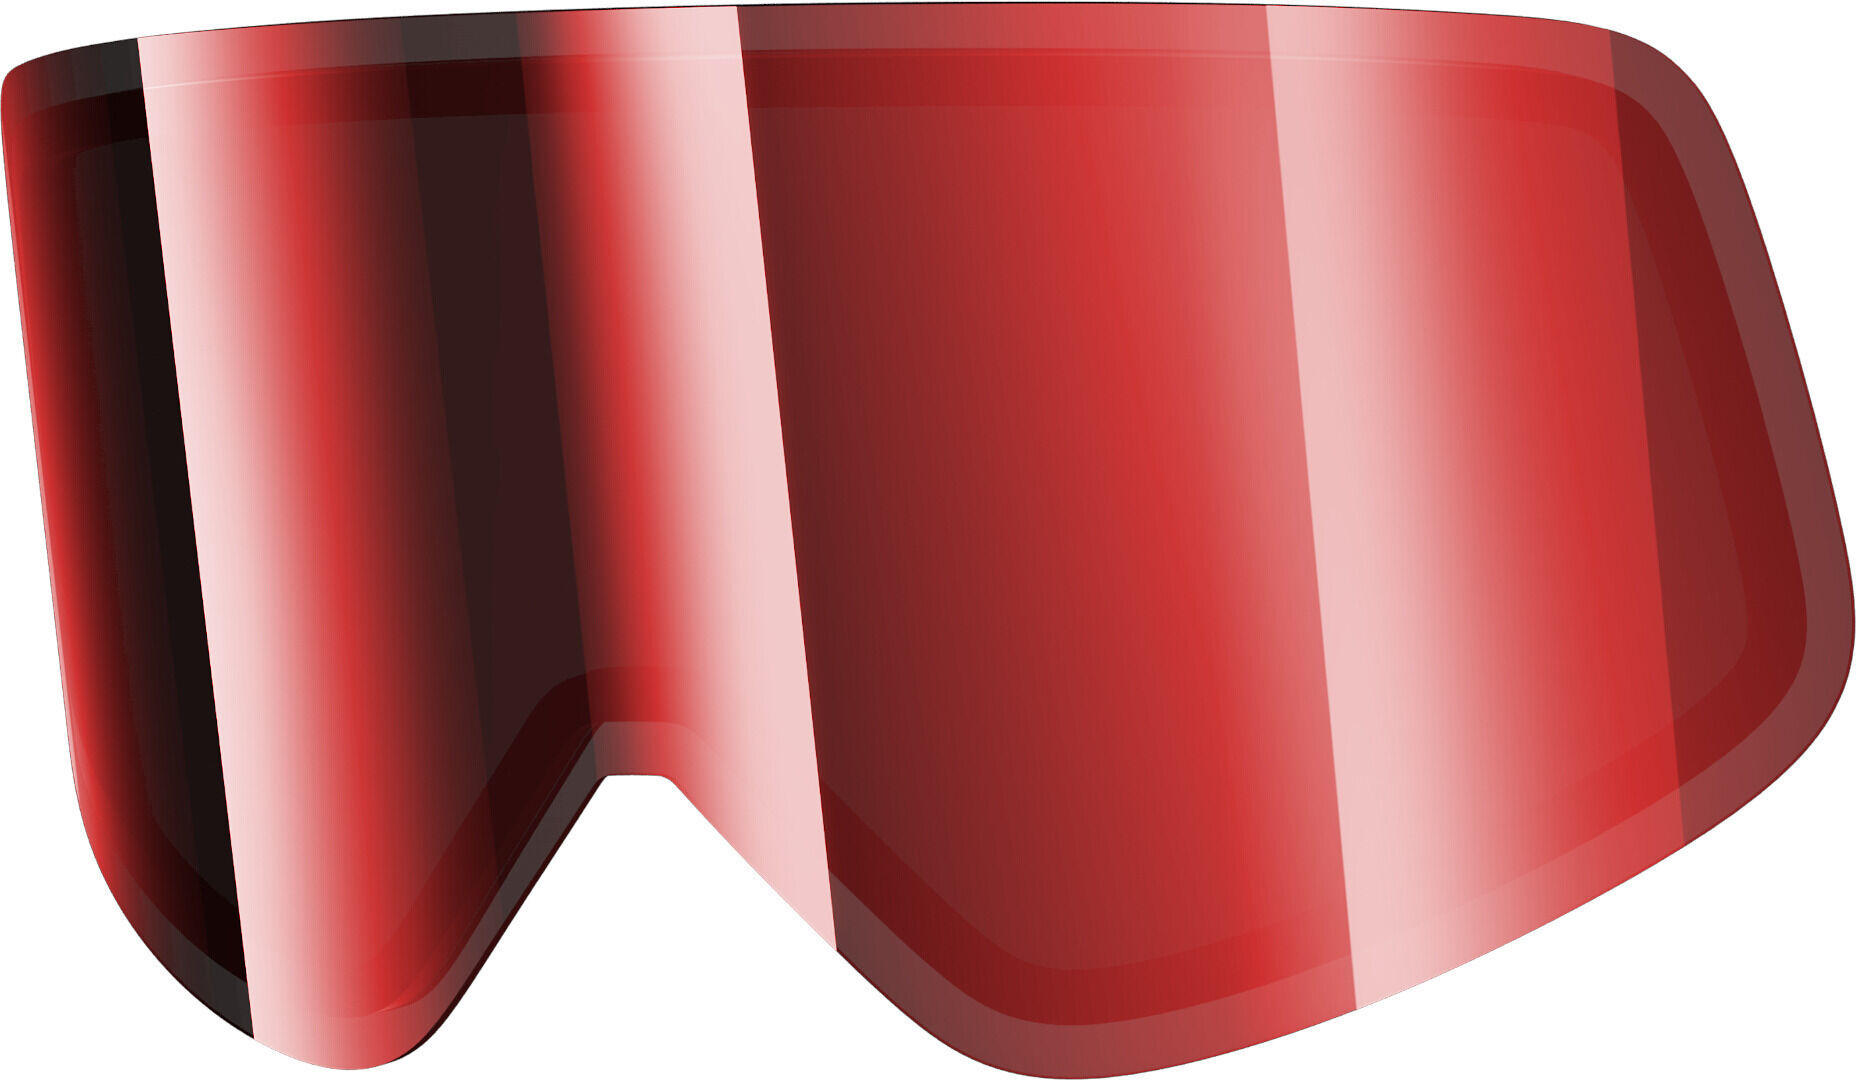 Shark Lente de reemplazo de gafas - Rojo (un tamaño)